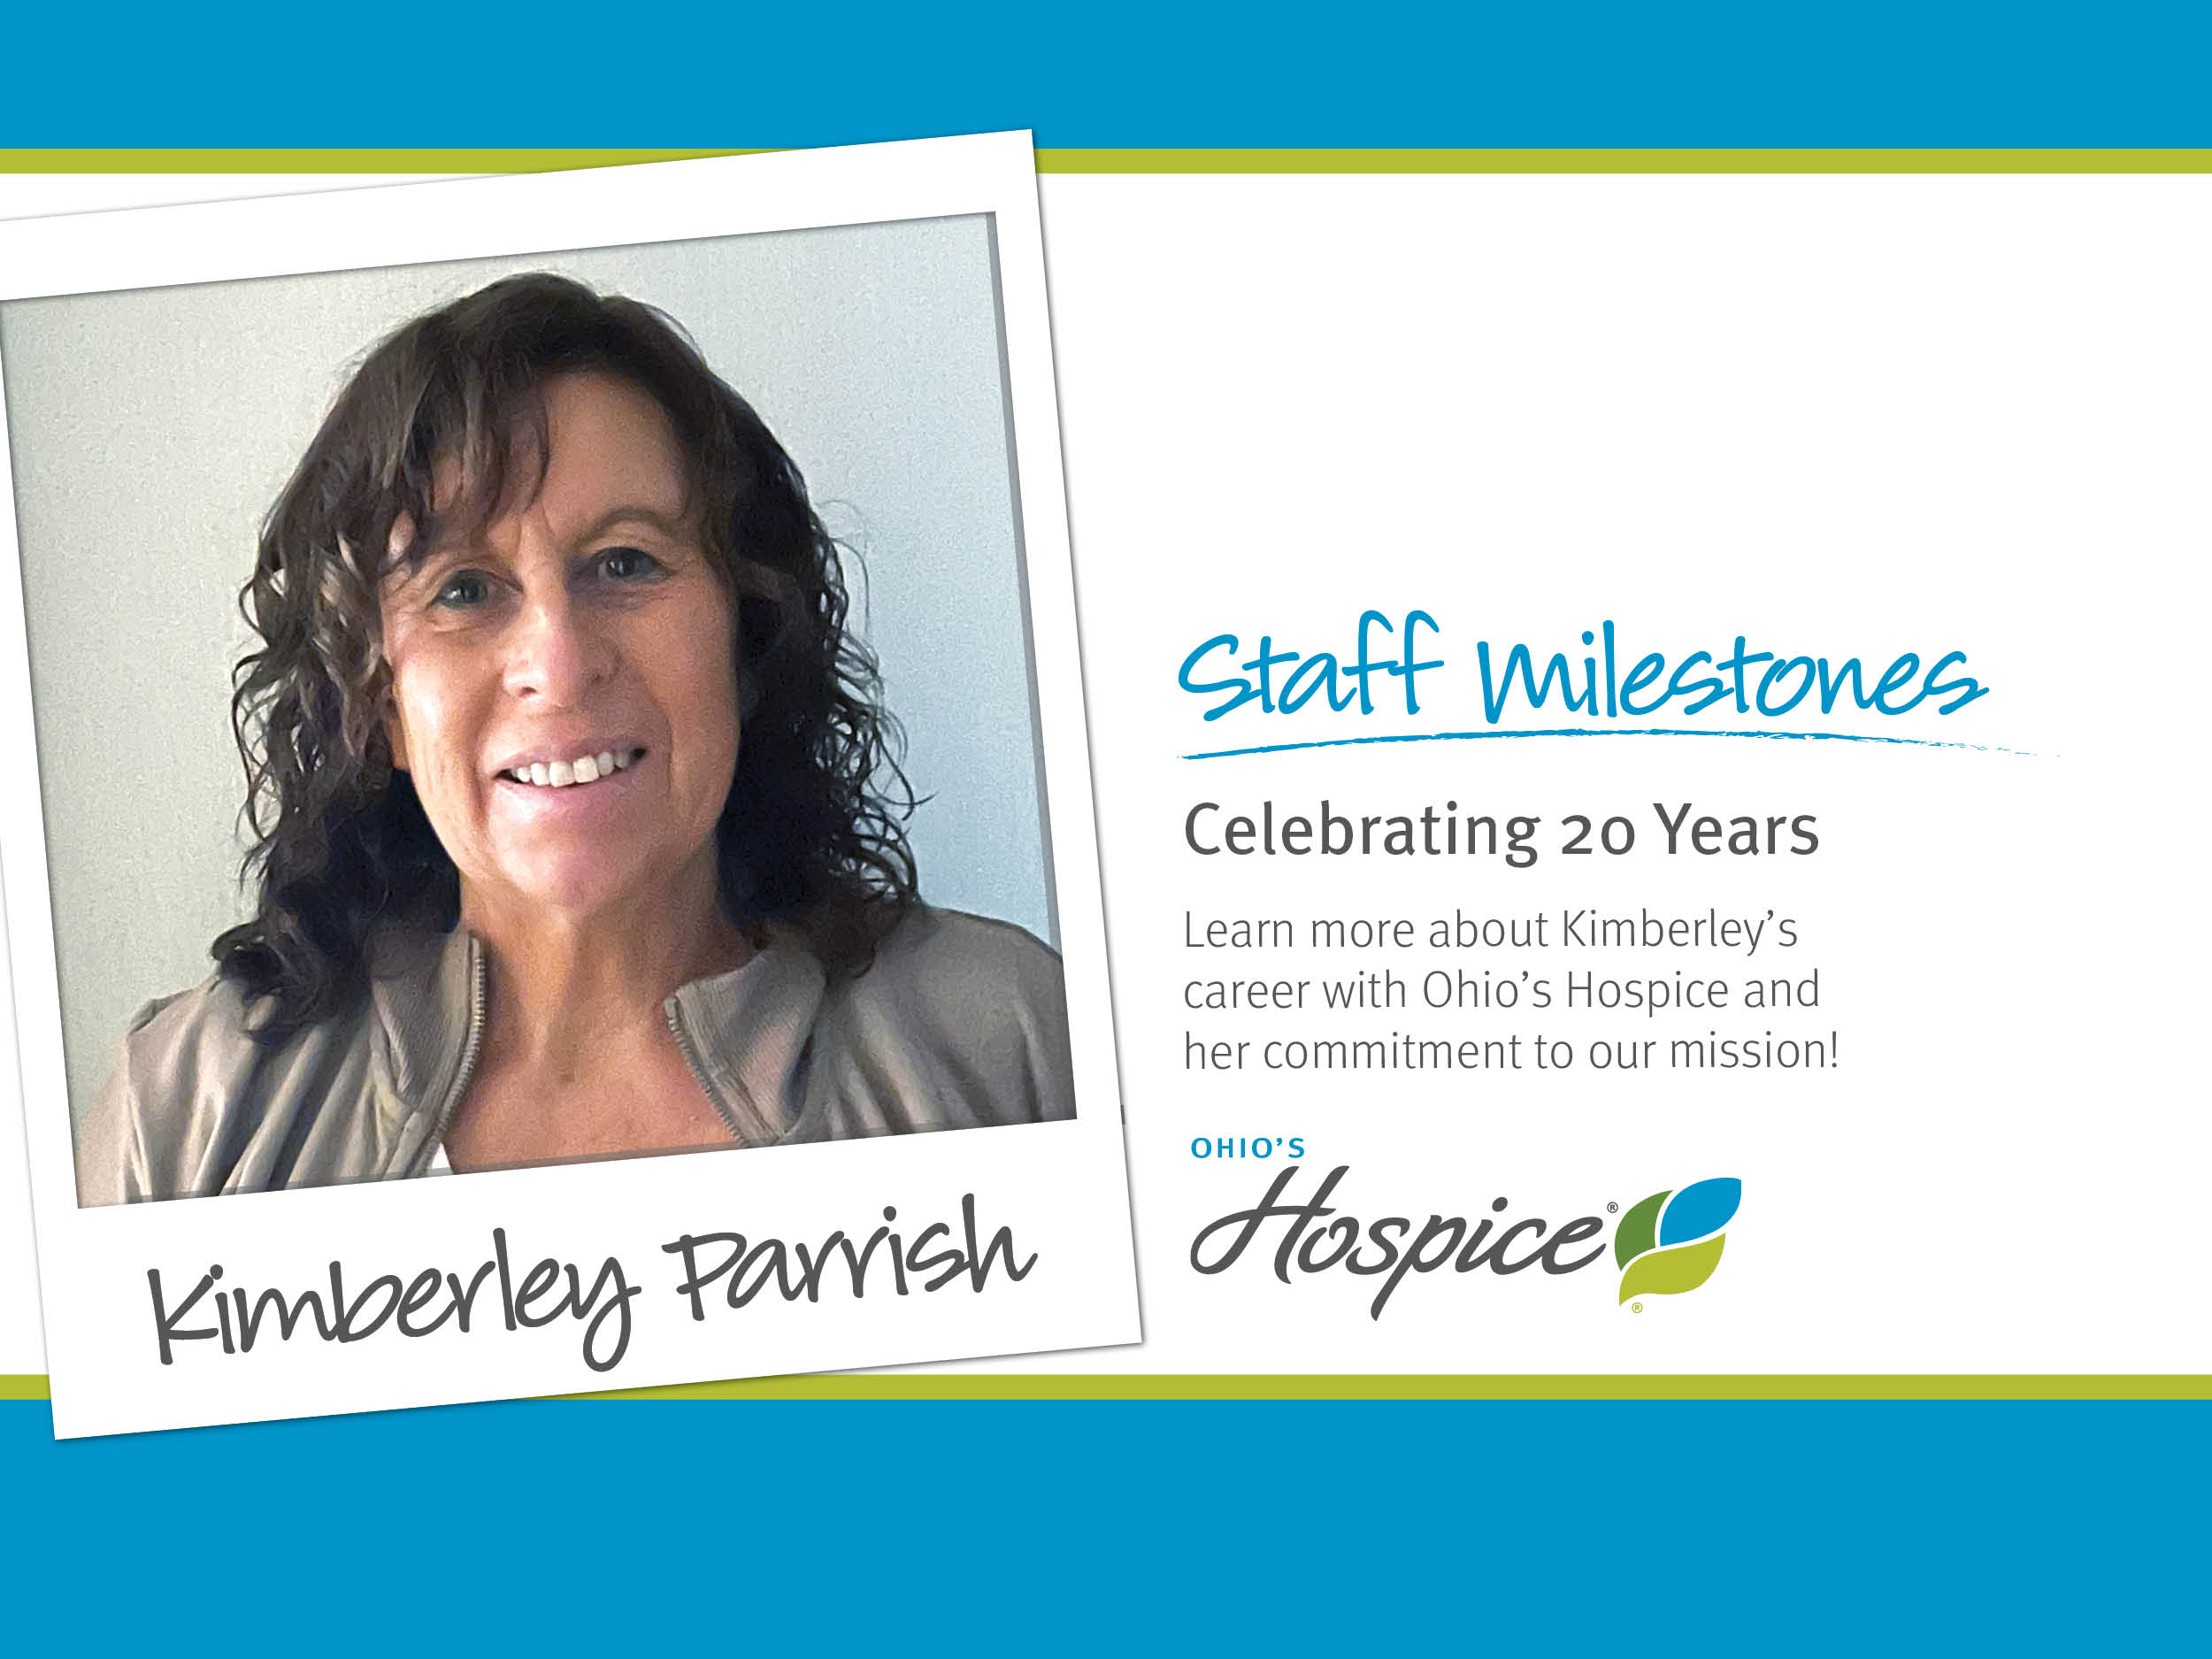 Staff Milestones. Kim Parrish celebrates 20 years. Ohio's Hospice